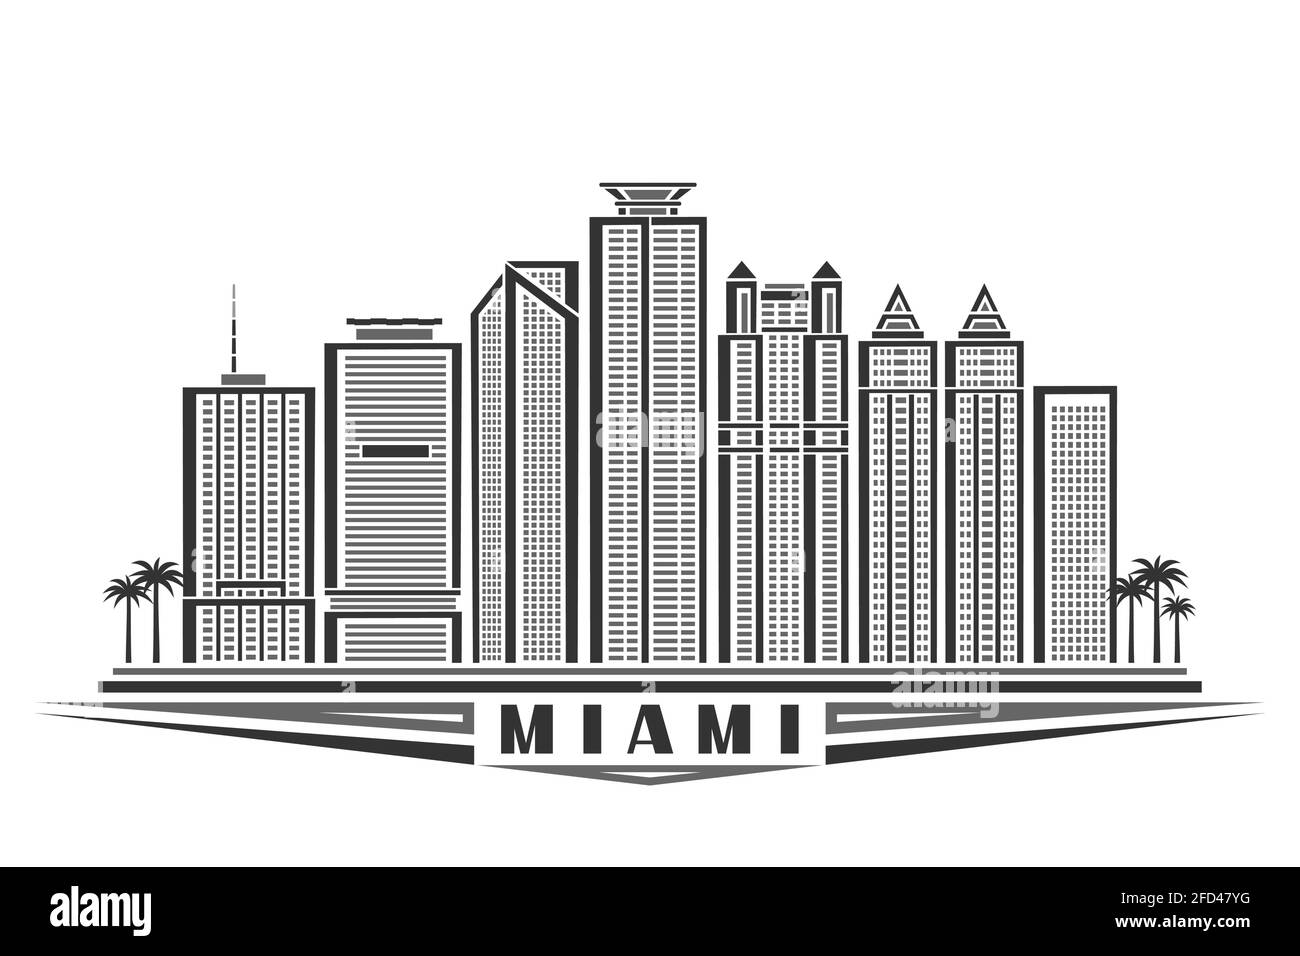 Ilustración vectorial de Miami, póster horizontal monocromo con diseño de contorno famoso paisaje urbano de miami, concepto de arte urbano con decoración única Ilustración del Vector